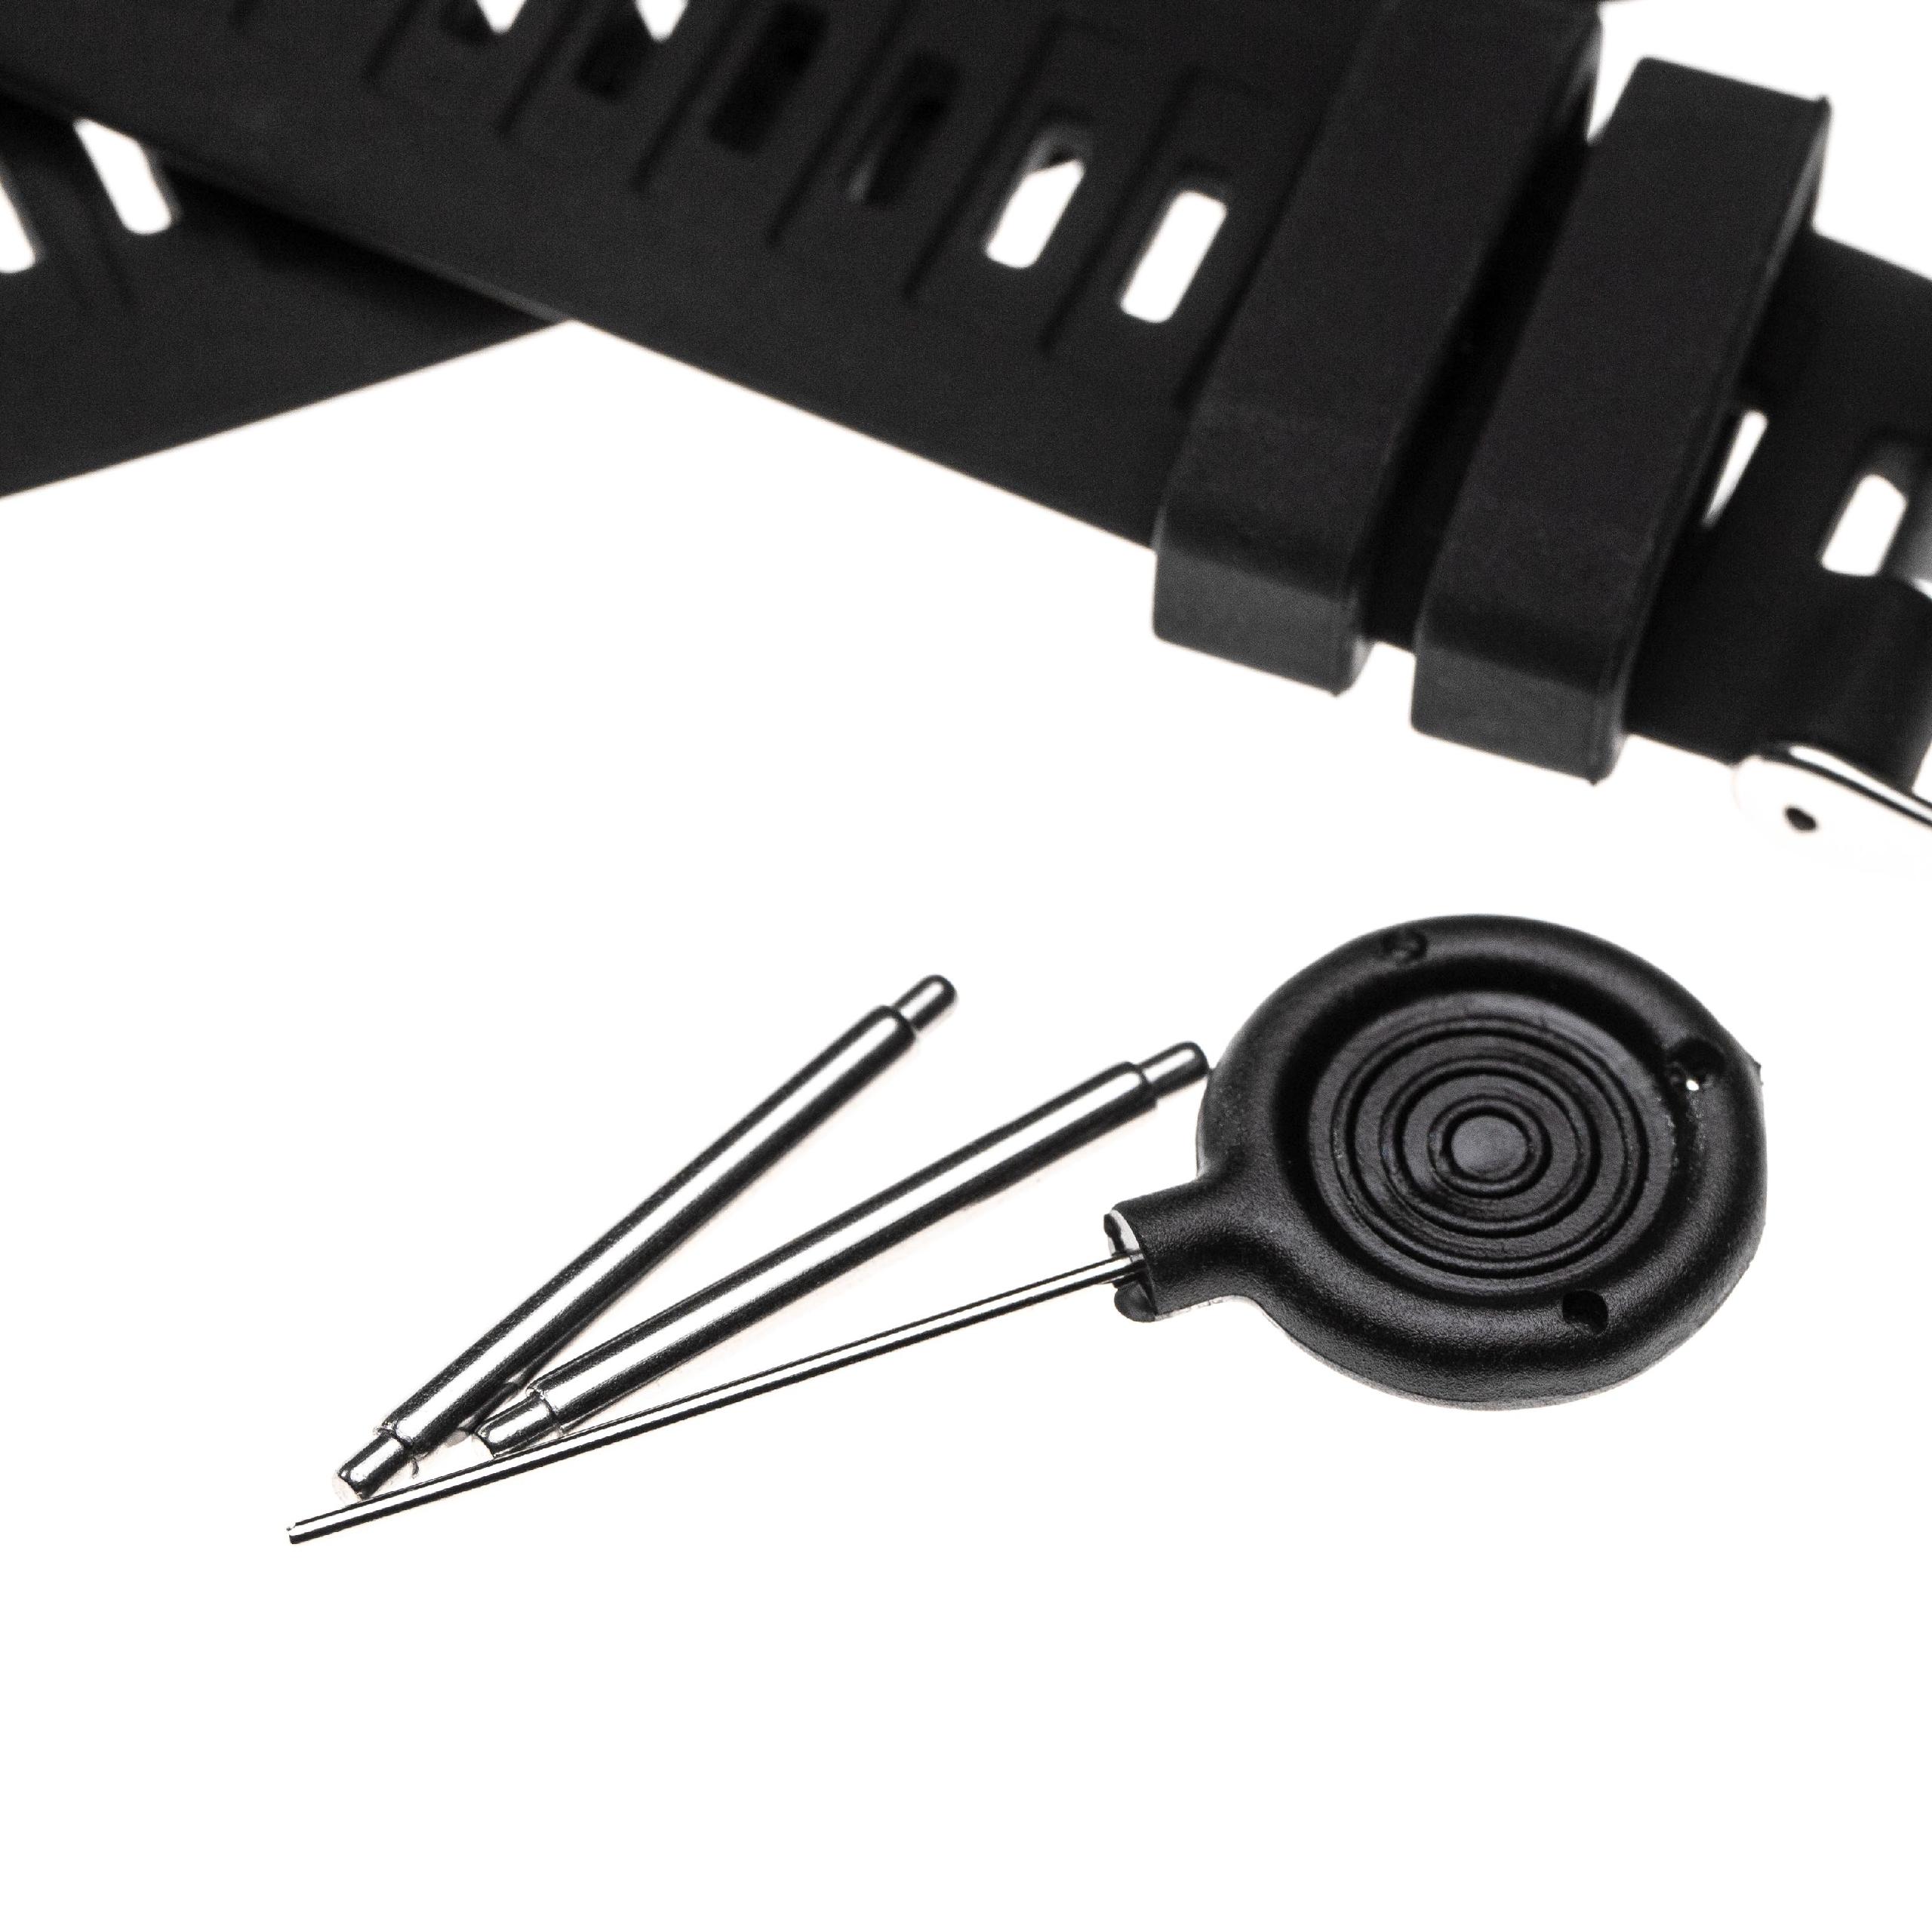 Armband für Garmin Smartwatch - 12,7 + 9,7 cm lang, Silikon, schwarz